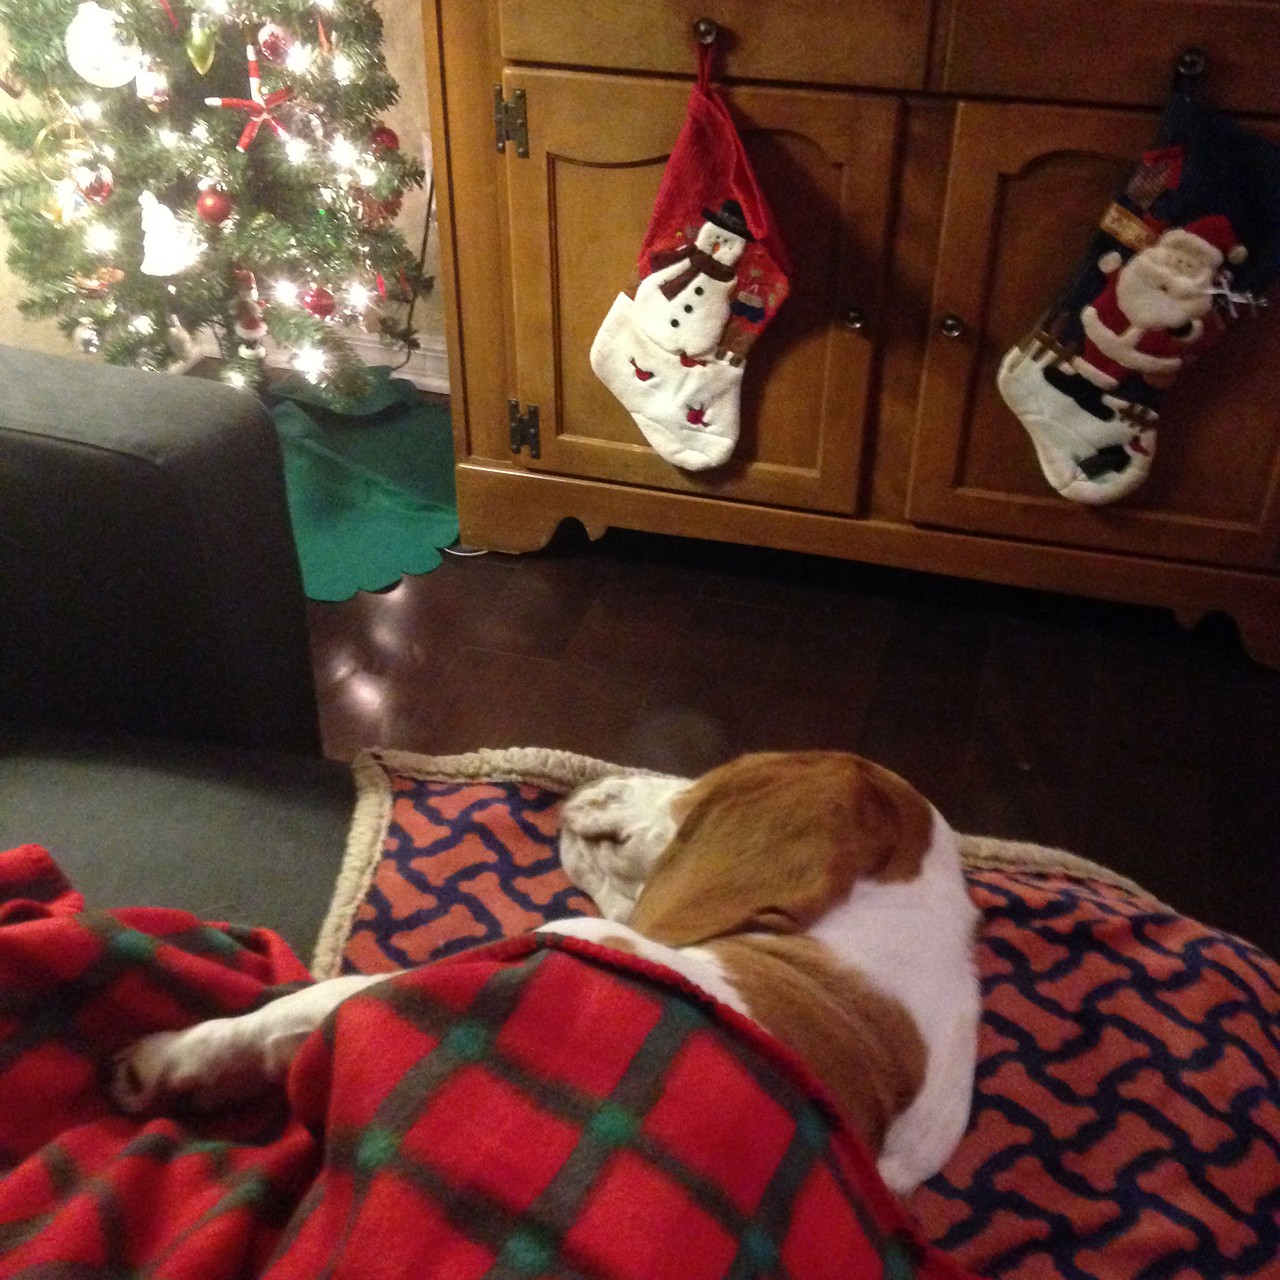 Sleepy Basset hound now awaiting Christmas